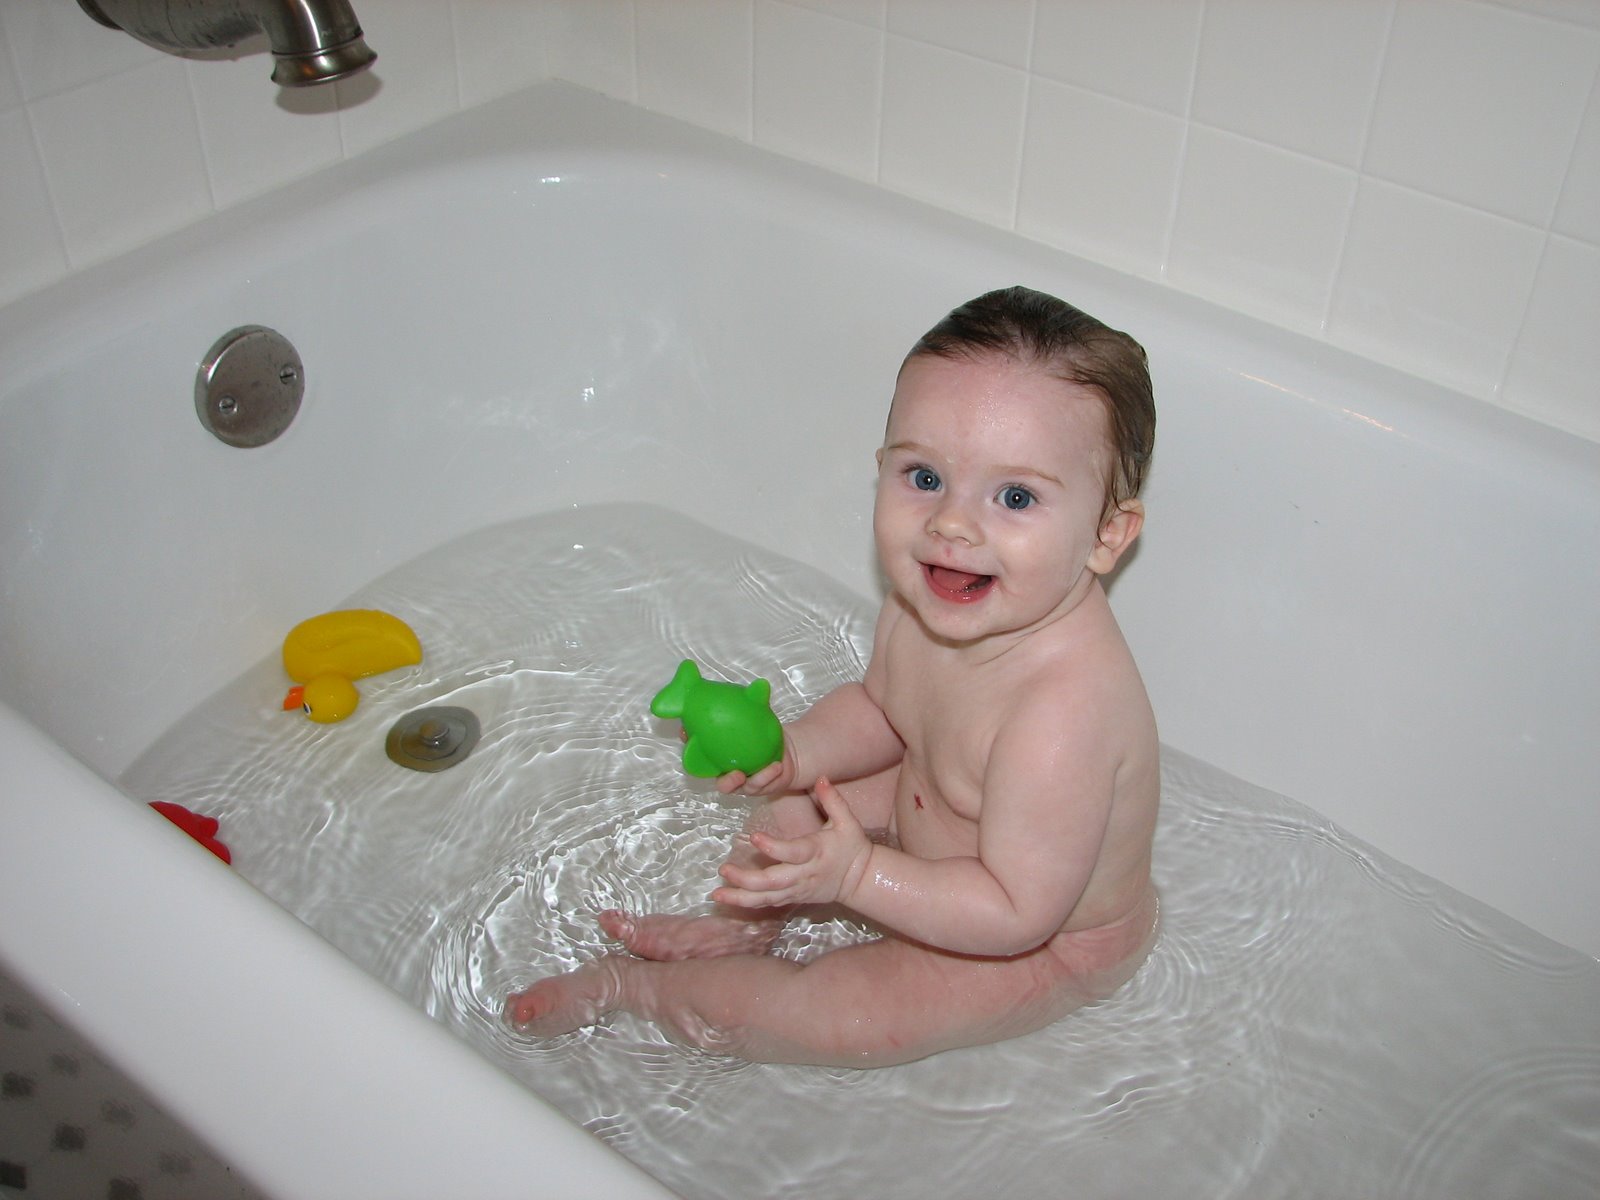 [Kelsey+-+9+months+happy+bath-tub+time+004.jpg]